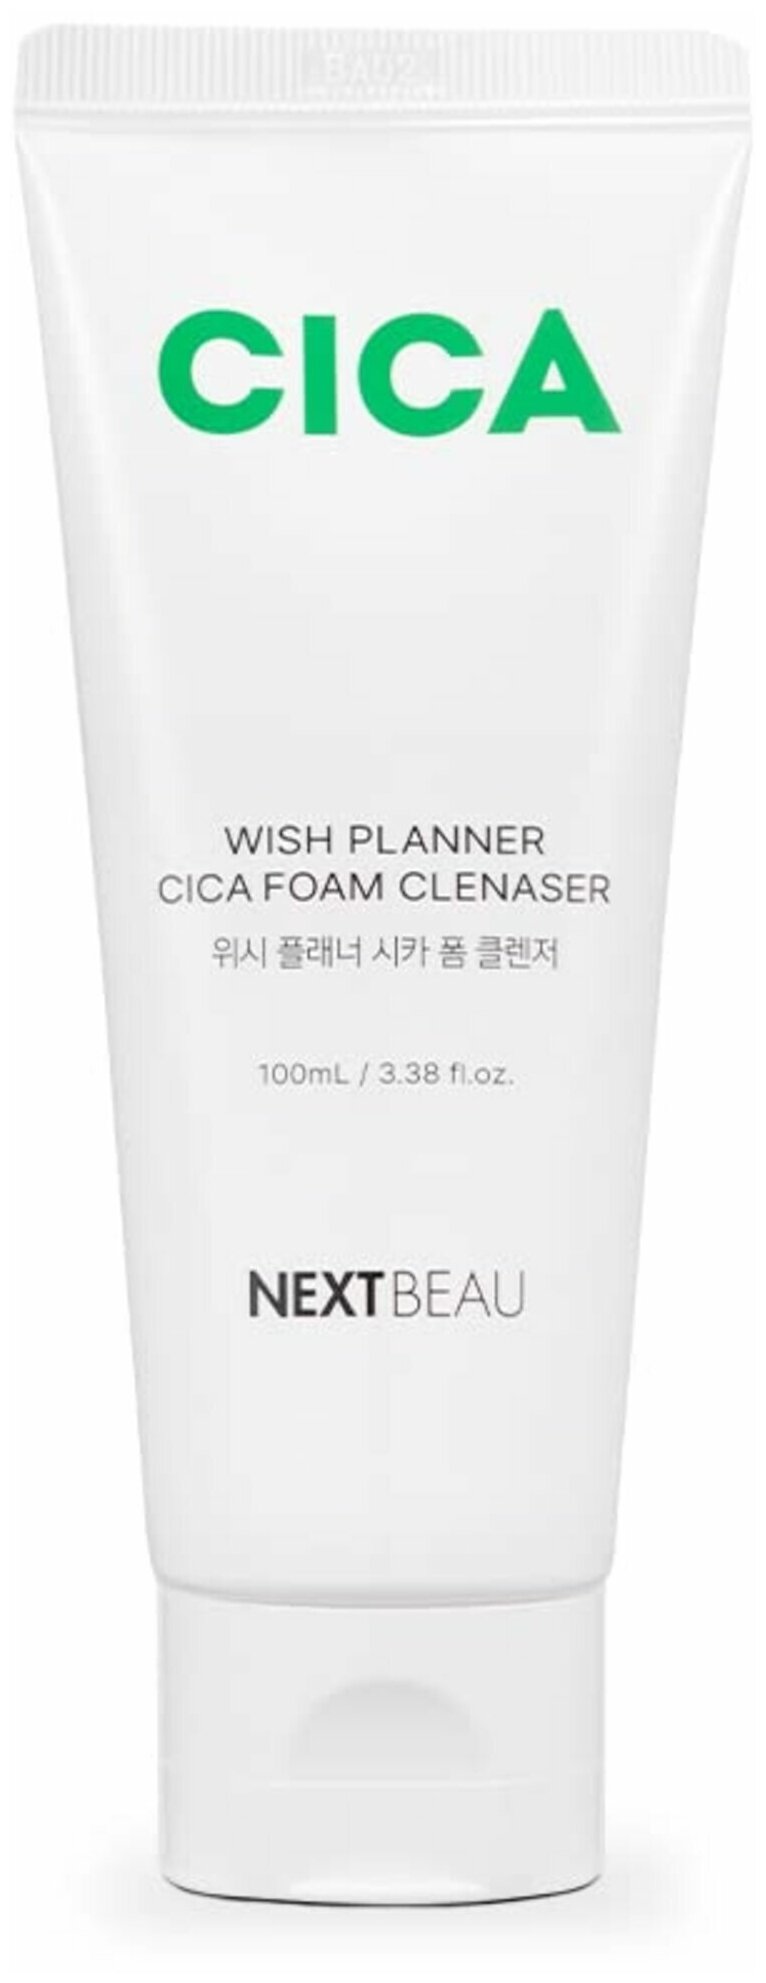 NEXTBEAU Пенка для умывания с центеллой азиатской - Wish planner cica foam cleanser, 100мл